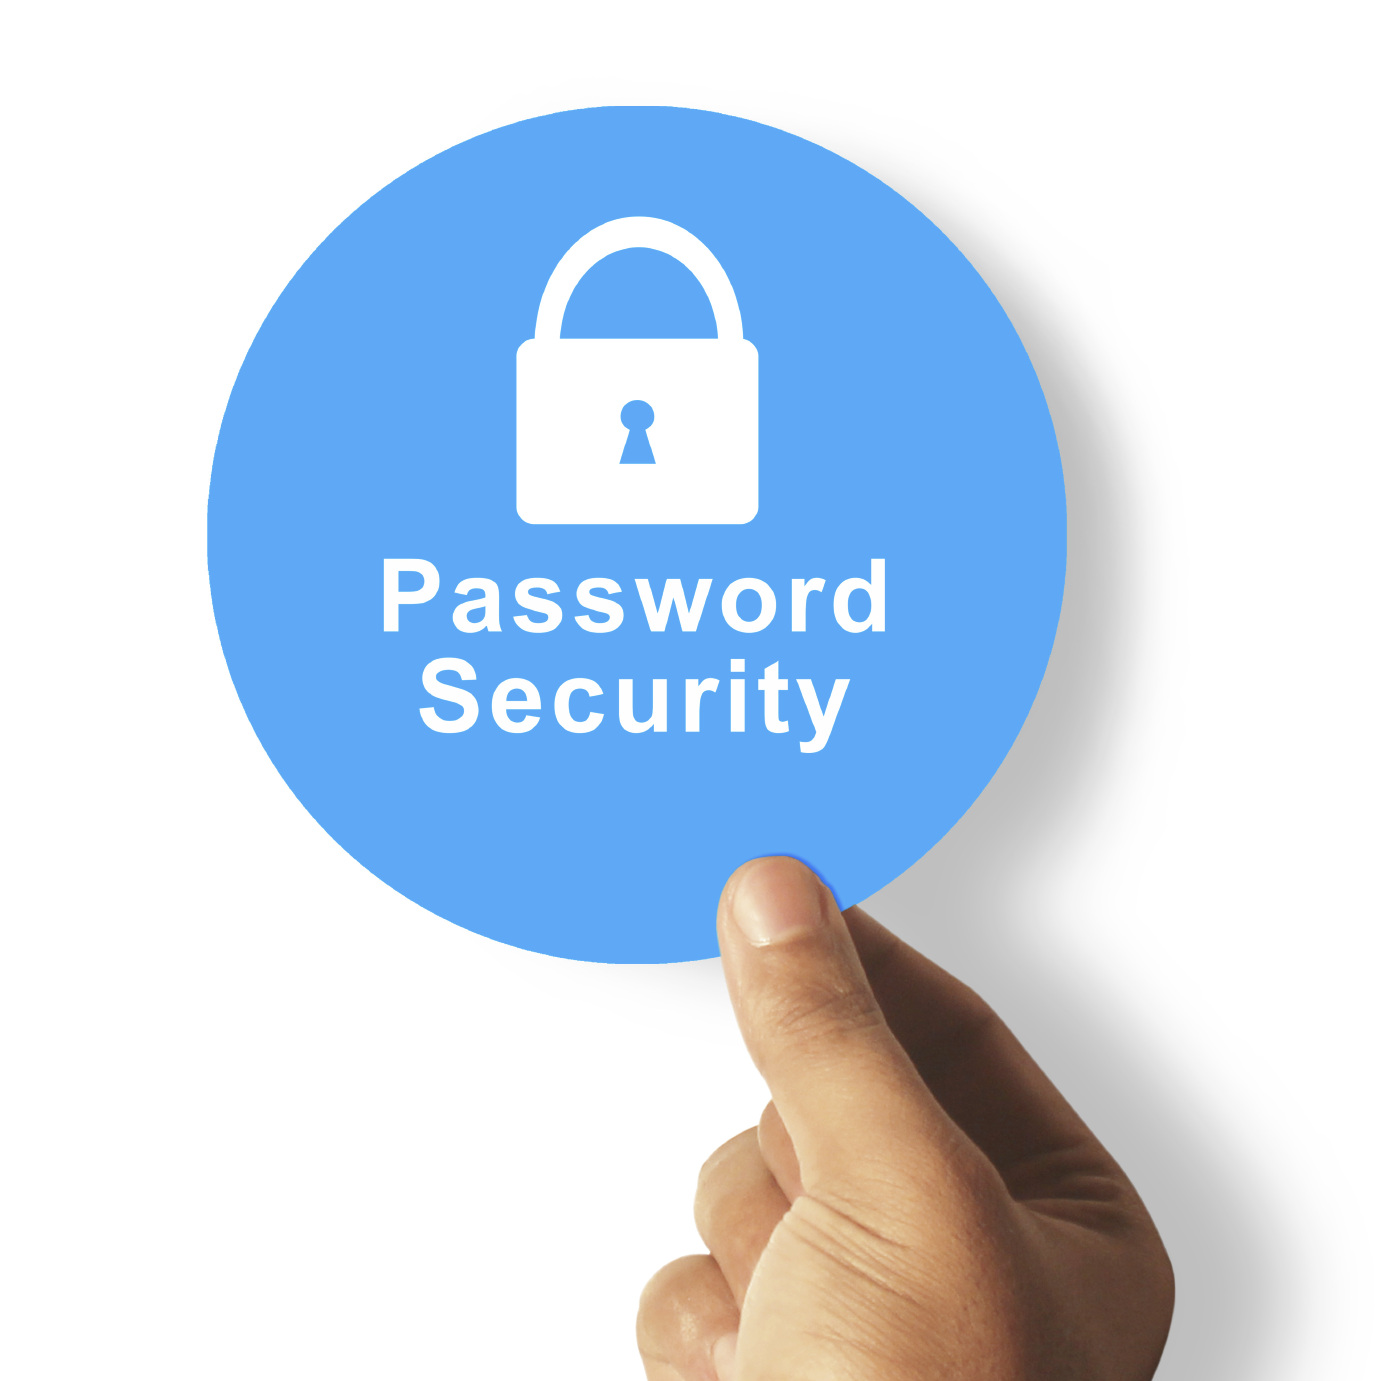 Secure password. Пароль картинка. Надежный пароль картинки. Надежность паролей в картинках. Пароль картинка для презентации.